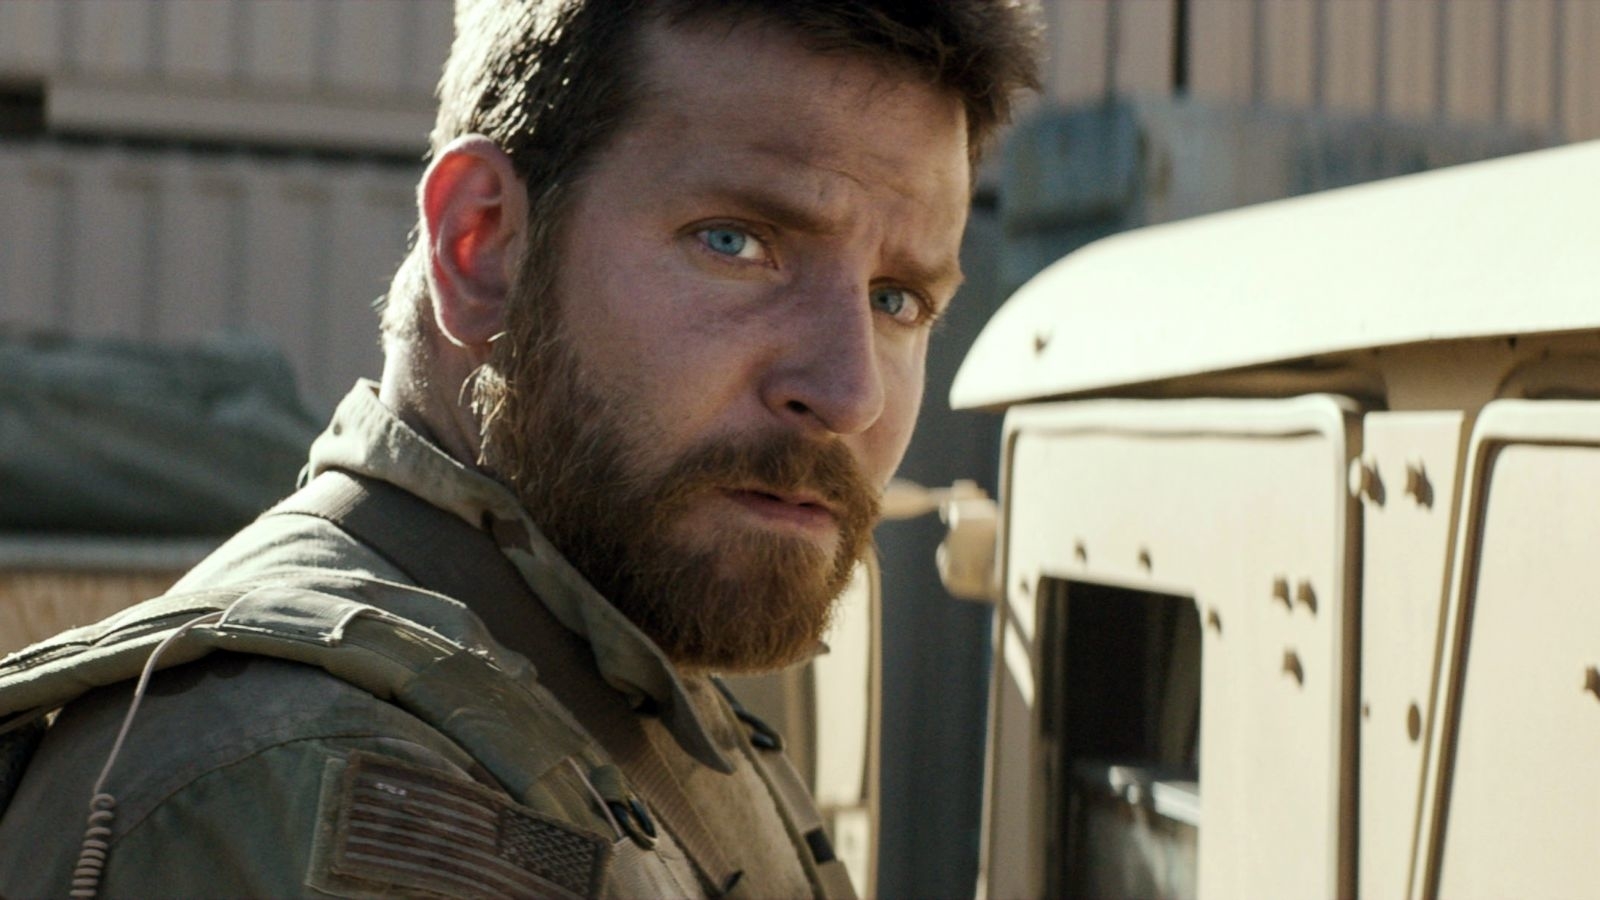 Bearded man in military attire, intense gaze, standing near a vehicle